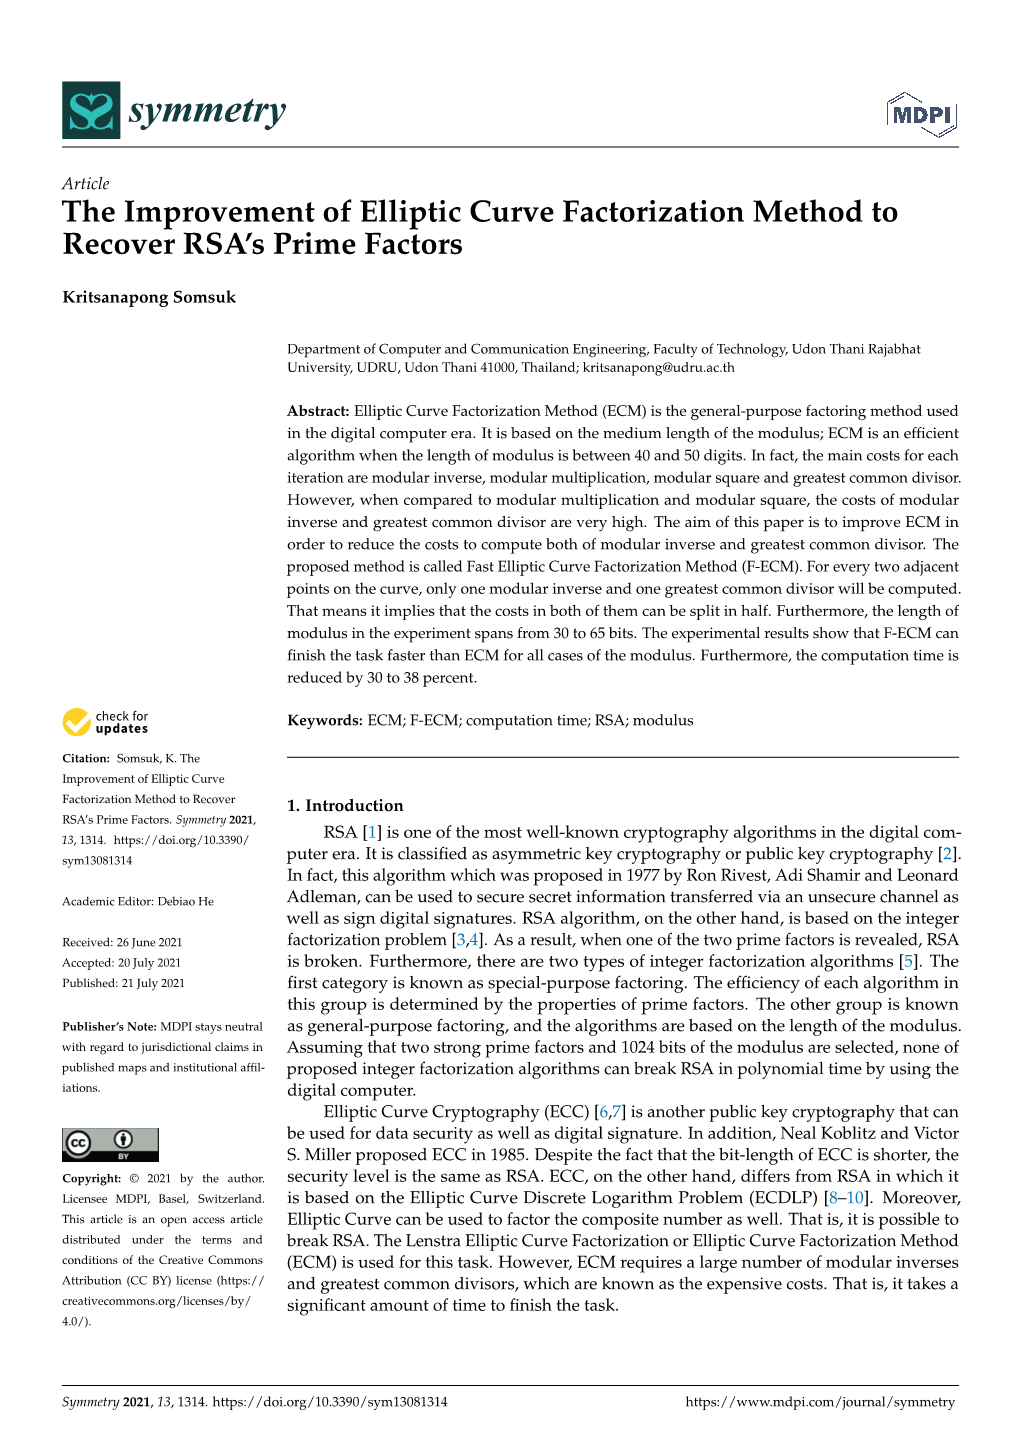 The Improvement of Elliptic Curve Factorization Method to Recover RSA’S Prime Factors